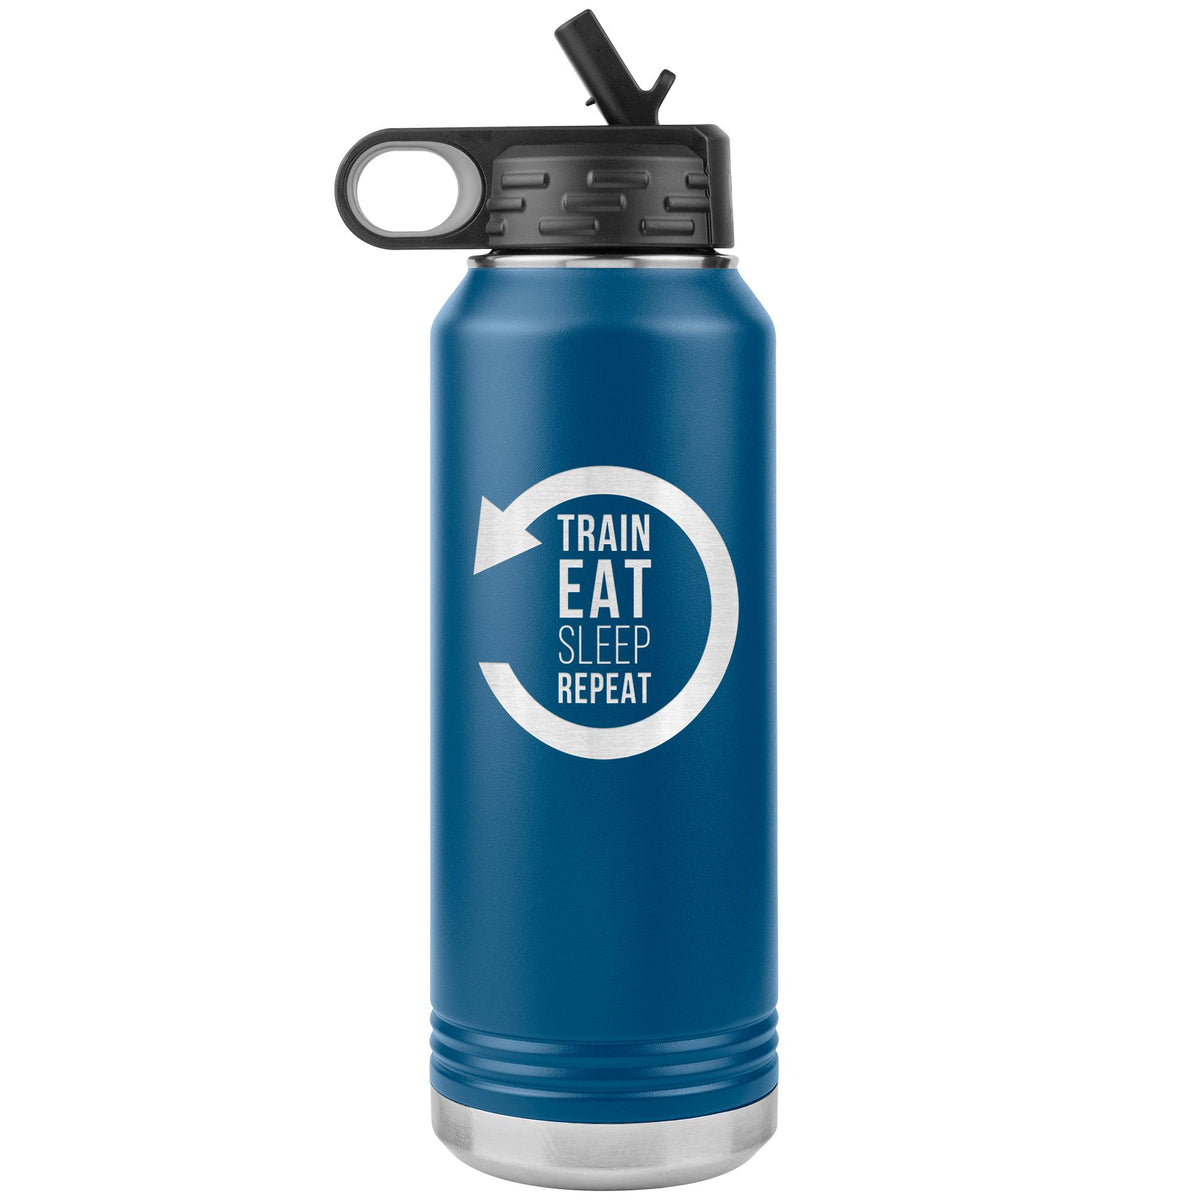 Train eat sleep repeat Water Bottle Tumbler 32 oz